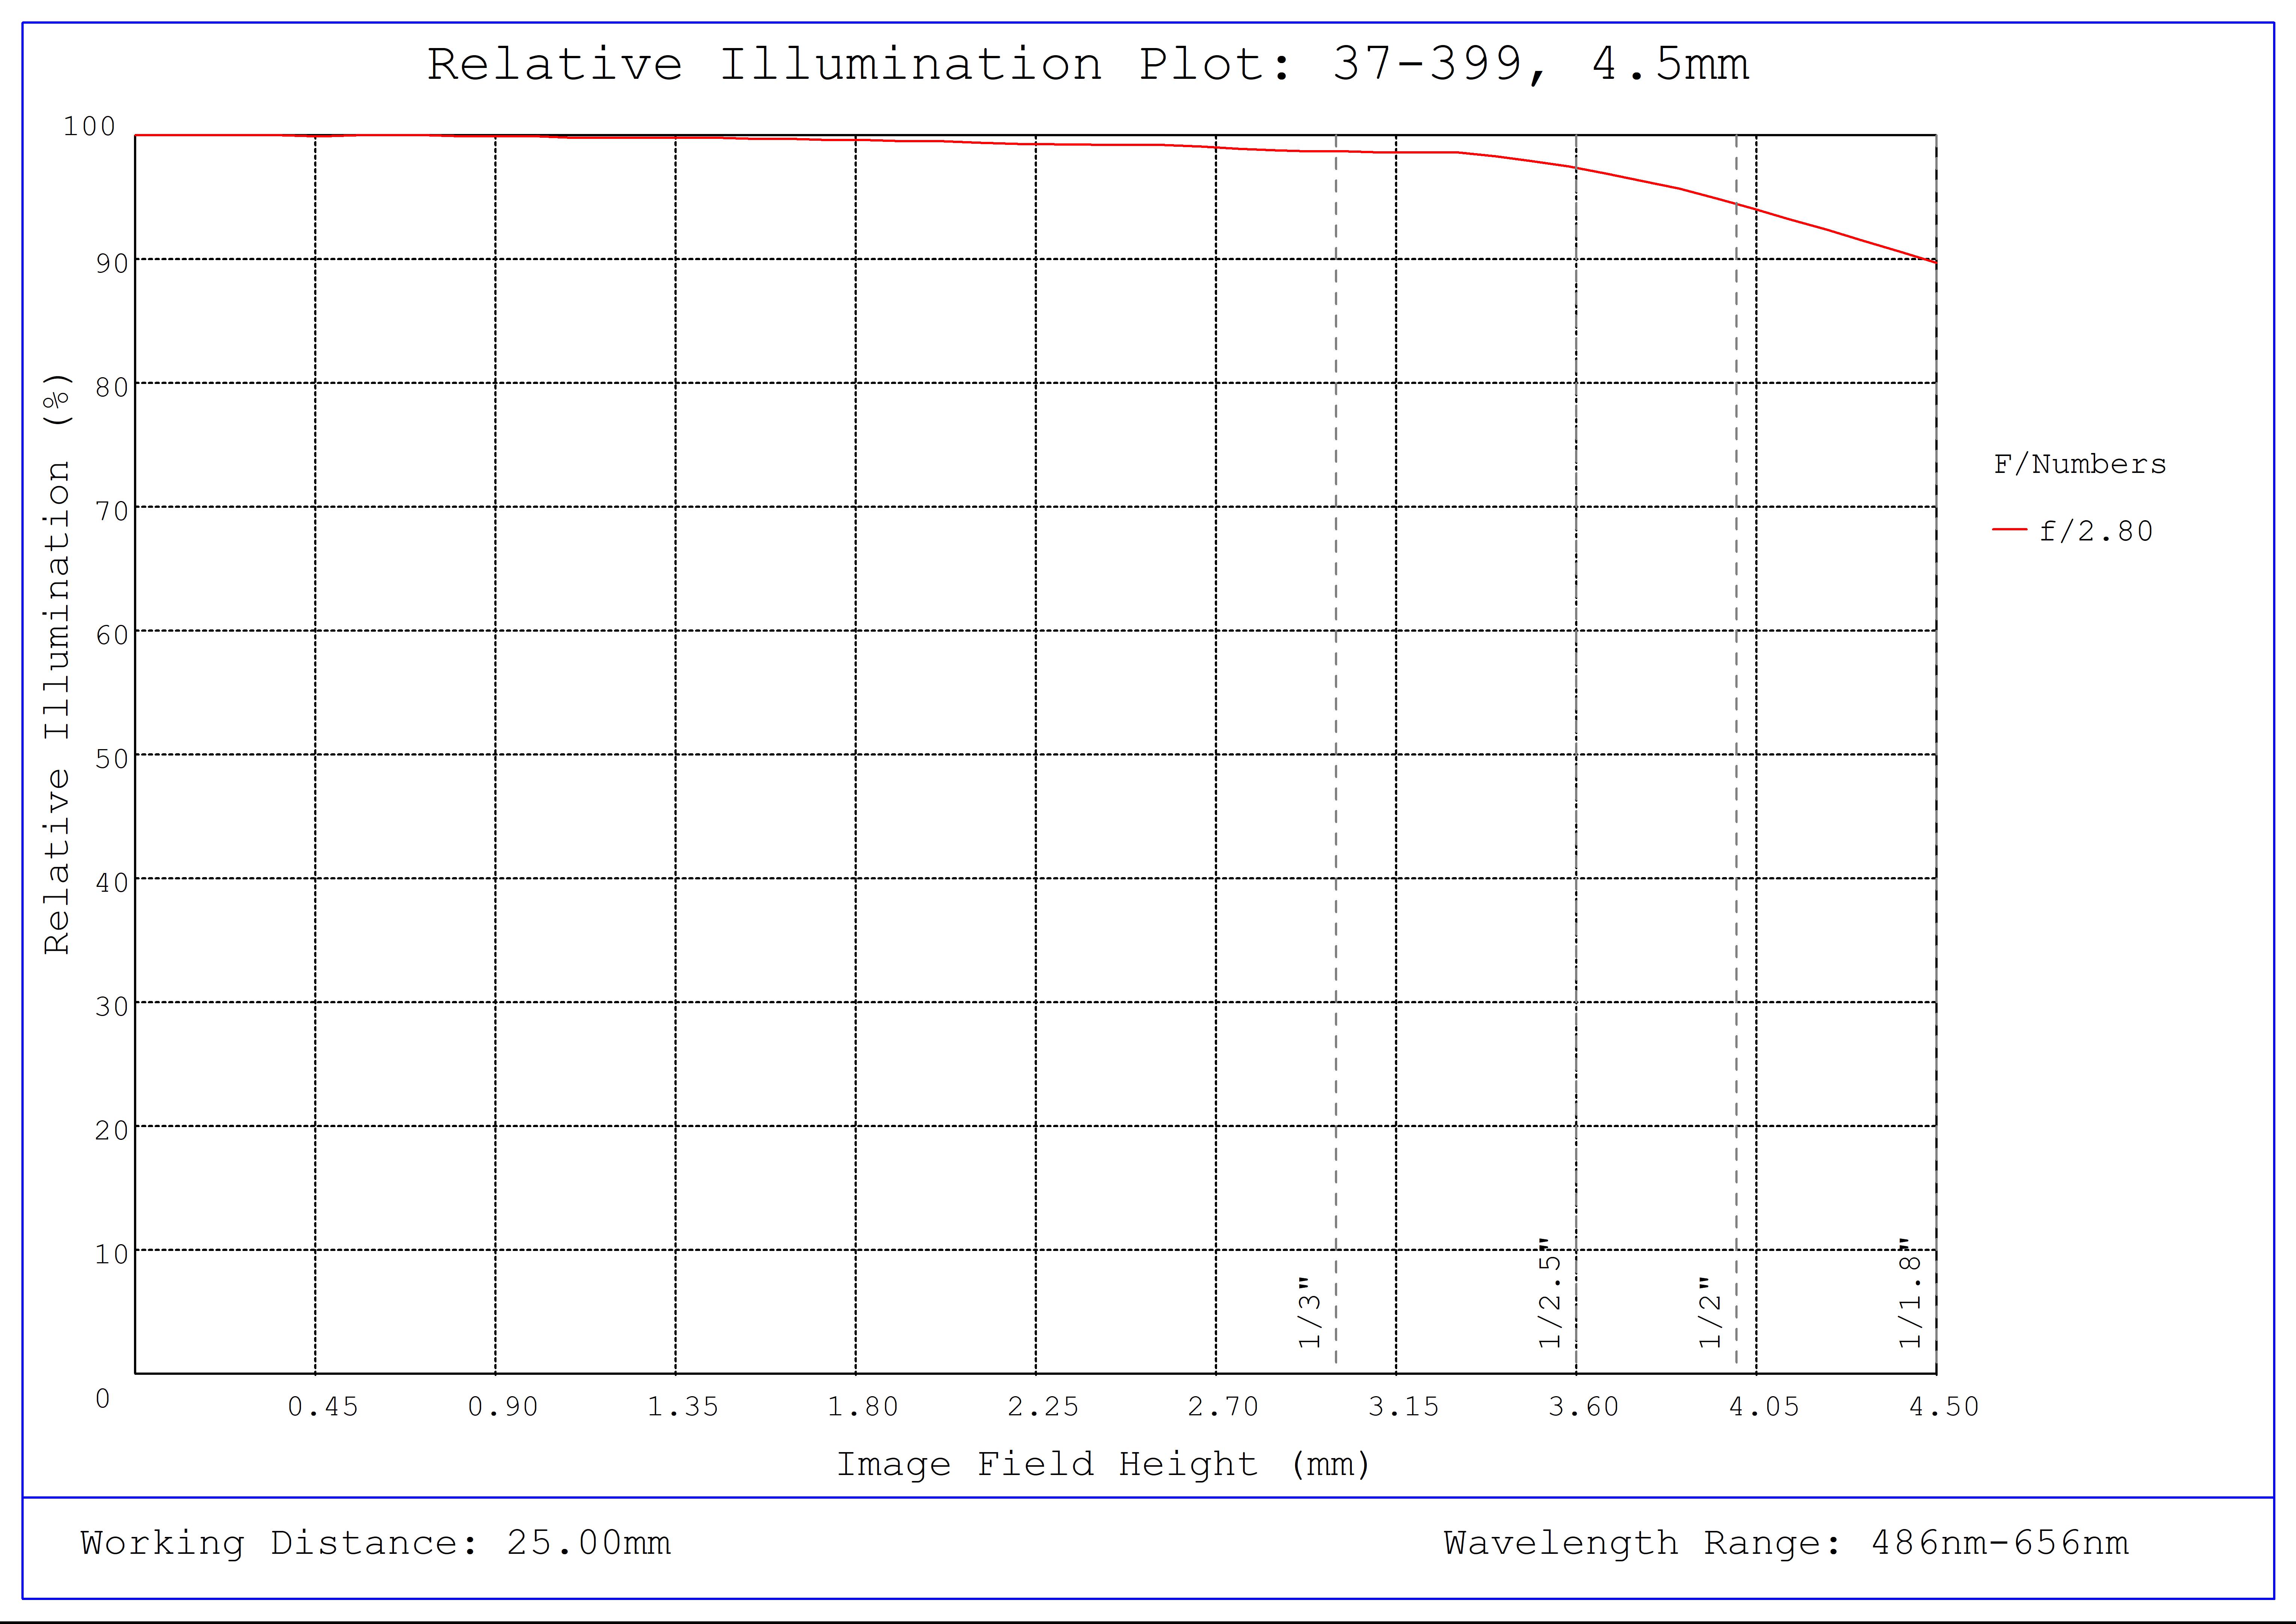 #37-399, 4.5mm, f/2.8 Cr Series Fixed Focal Length Lens, Relative Illumination Plot